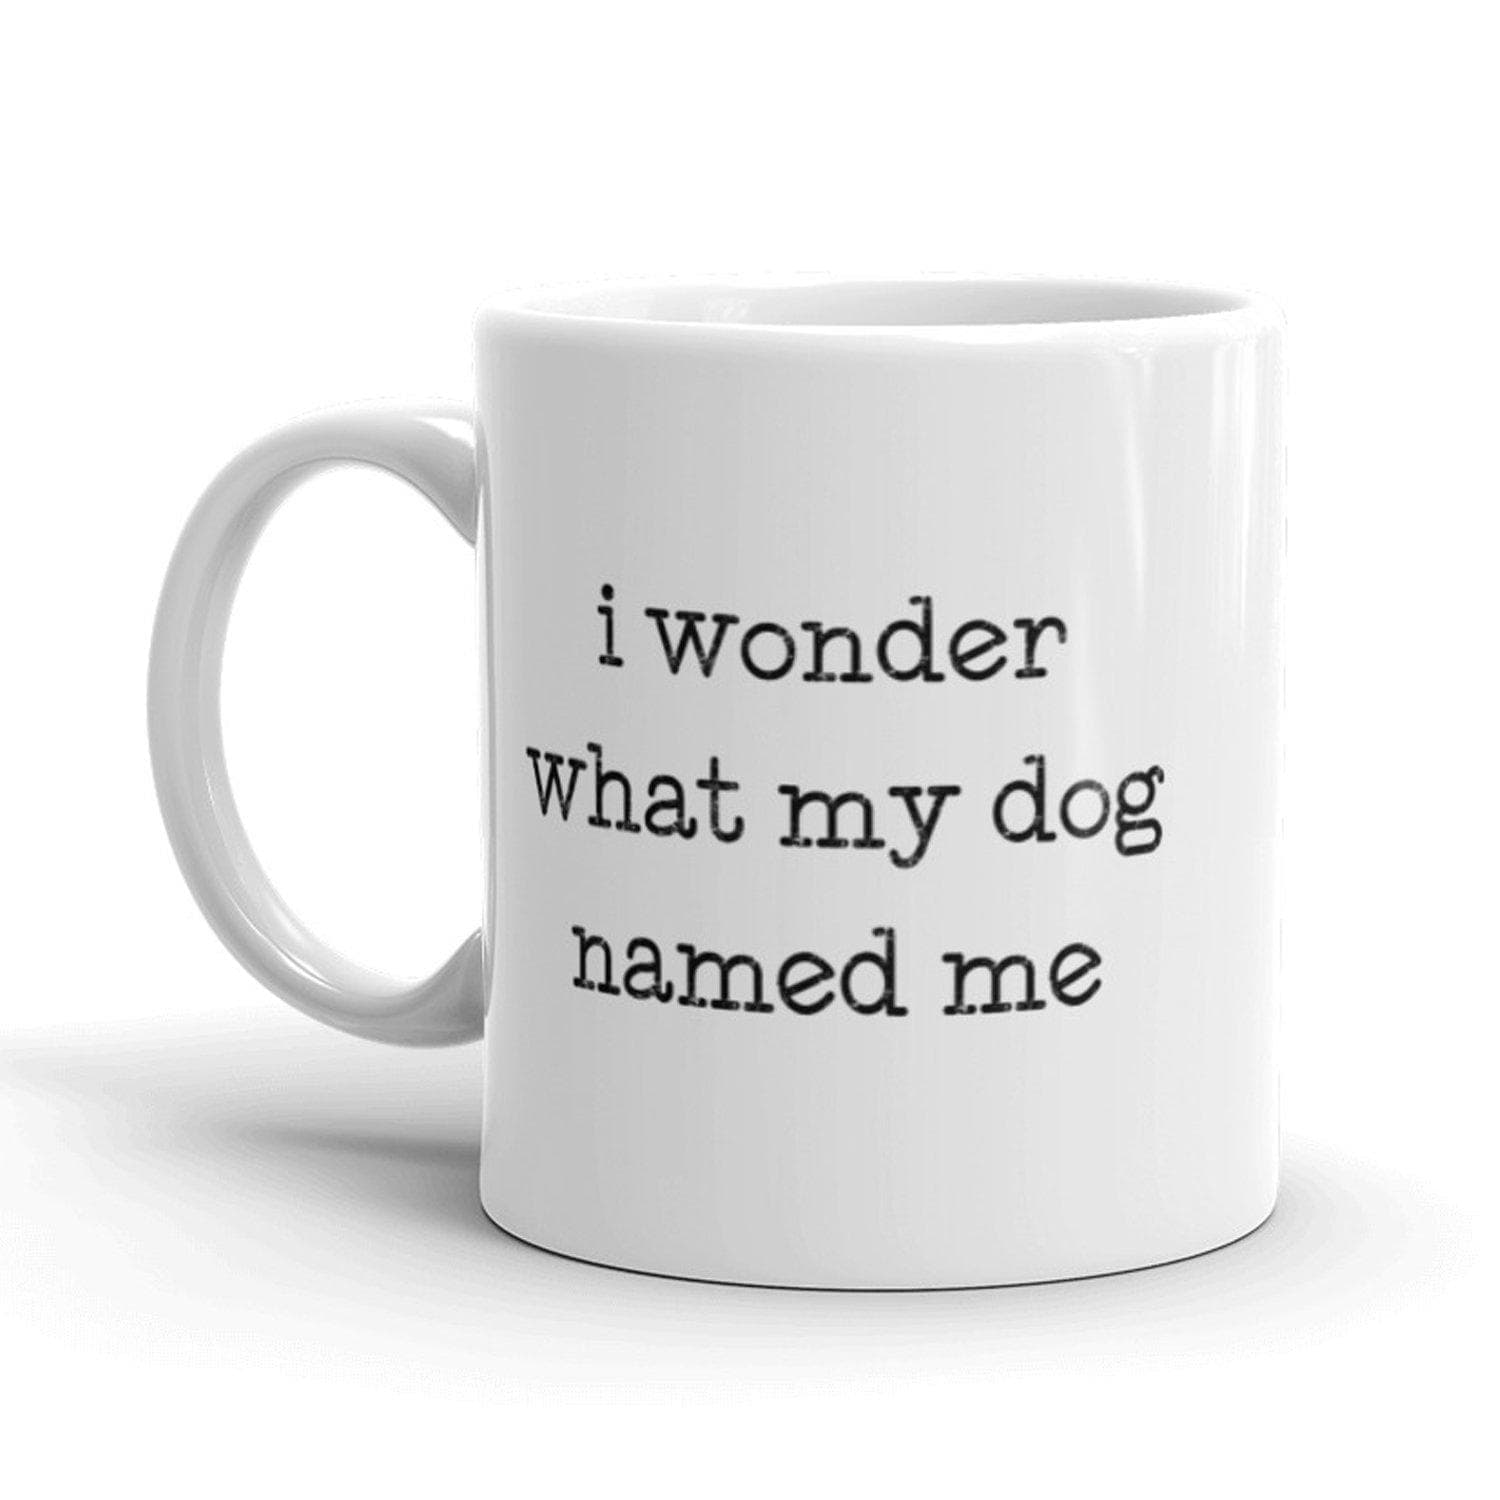 I Wonder What My Dog Named Me Mug - Crazy Dog T-Shirts